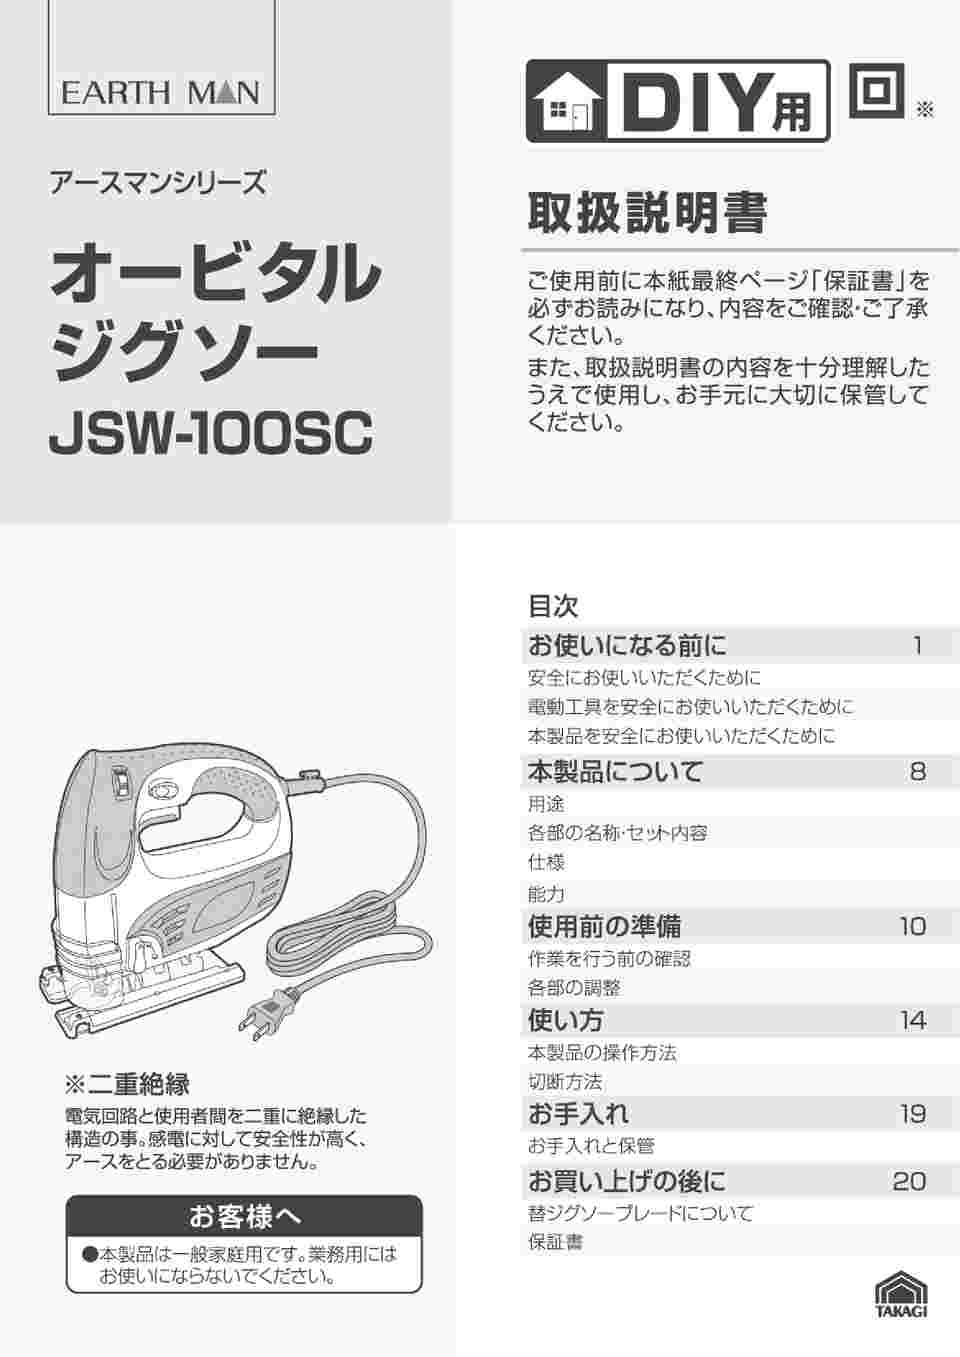 5％OFF】 高儀 EARTH MAN オービタルジグソー JSW-100SC DIY用 discoversvg.com